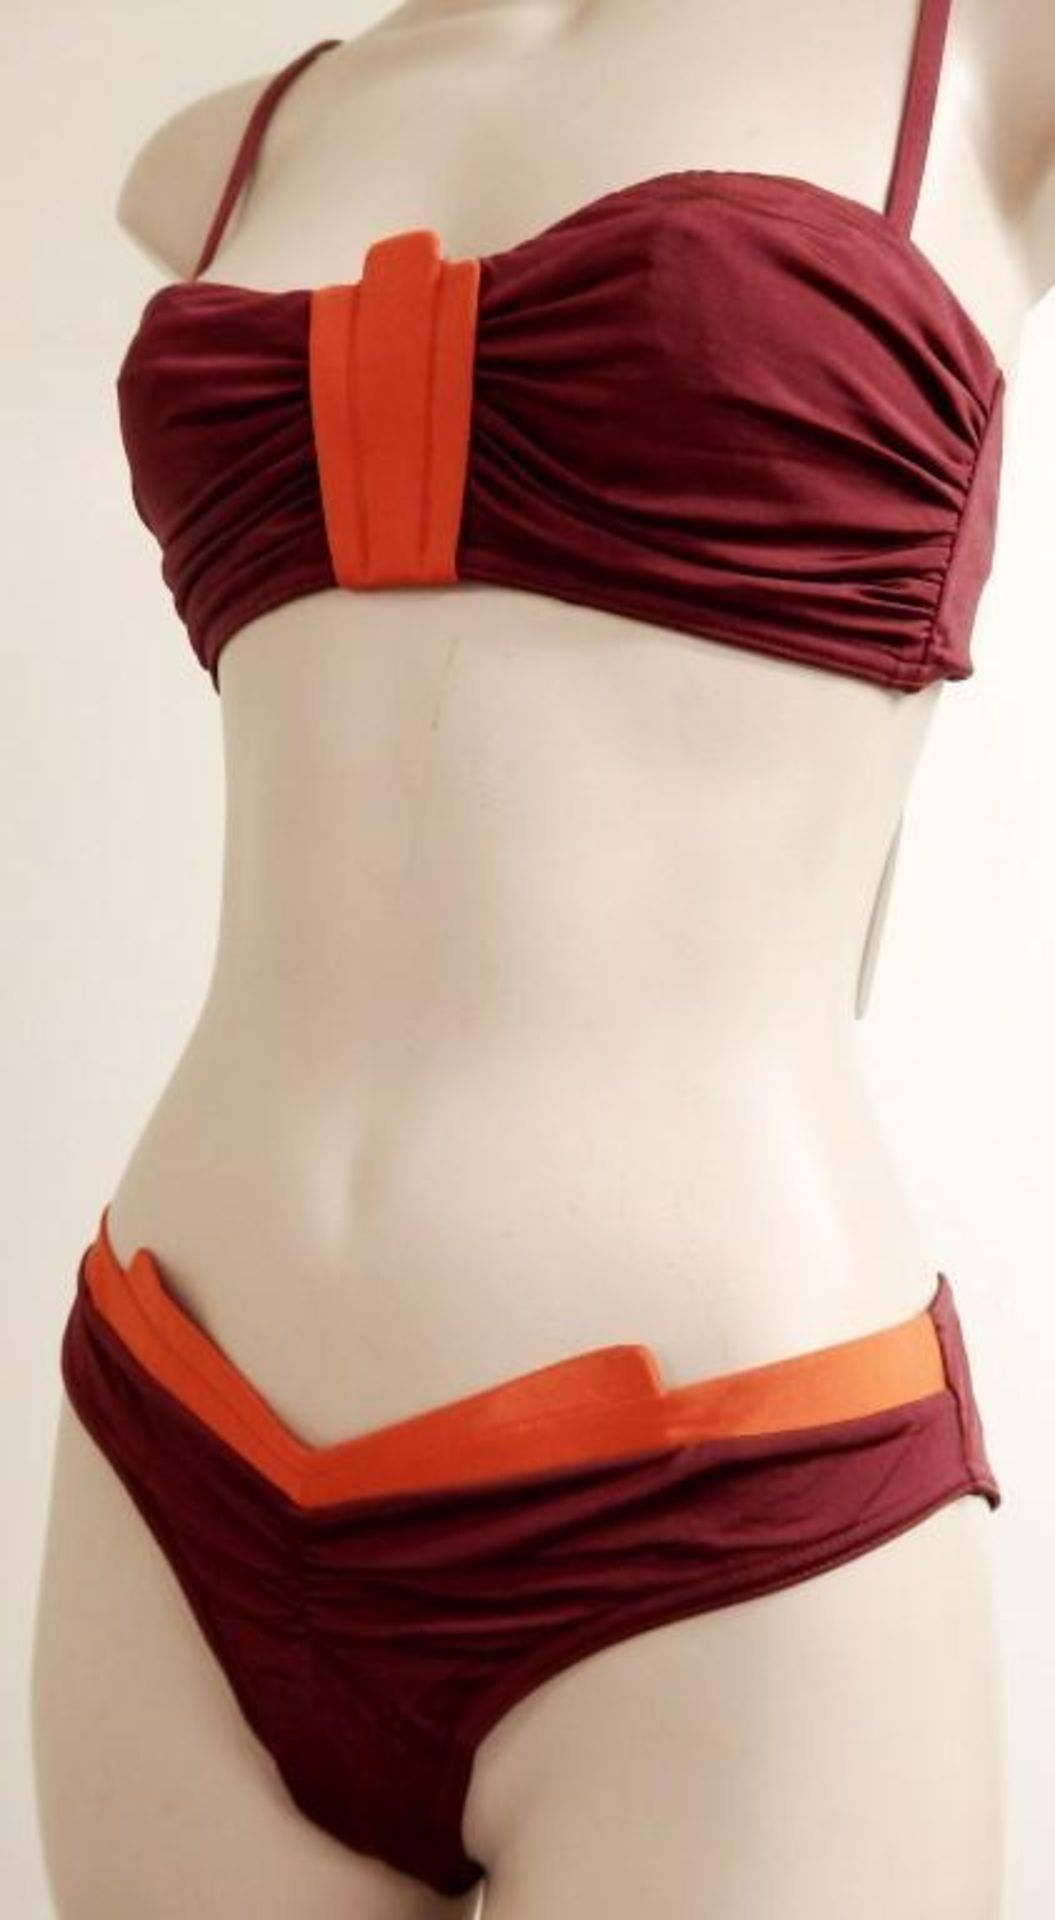 1 x Rasurel - Damson and Orange trim Bikini - R20346 Brassiere - Mini Slip - Size 2C - UK 32 - Fr 85